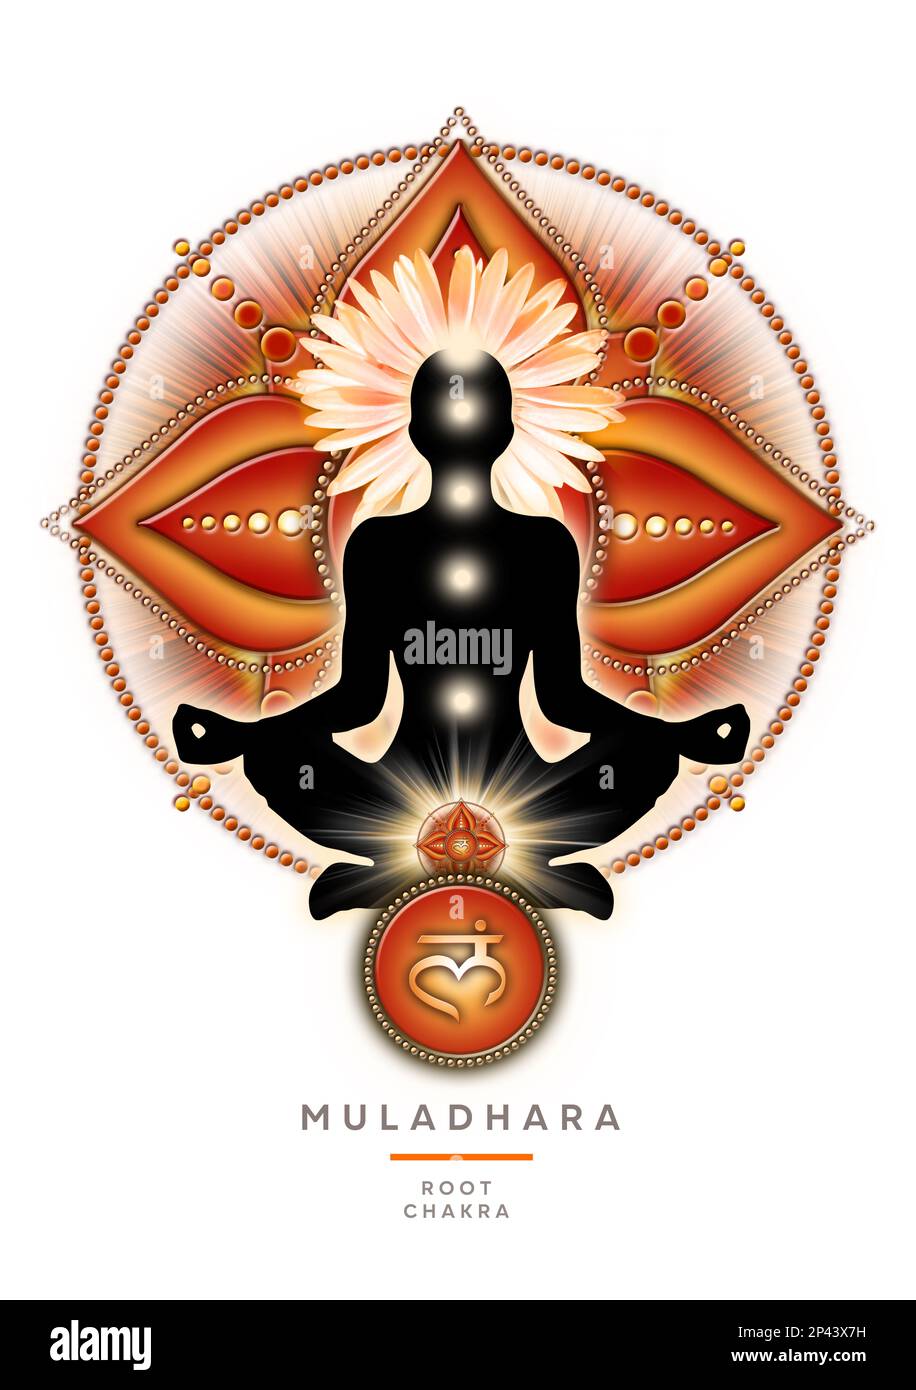 Root chakra meditation in yoga lotus pose, in front of muladhara chakra symbol. Stock Photo